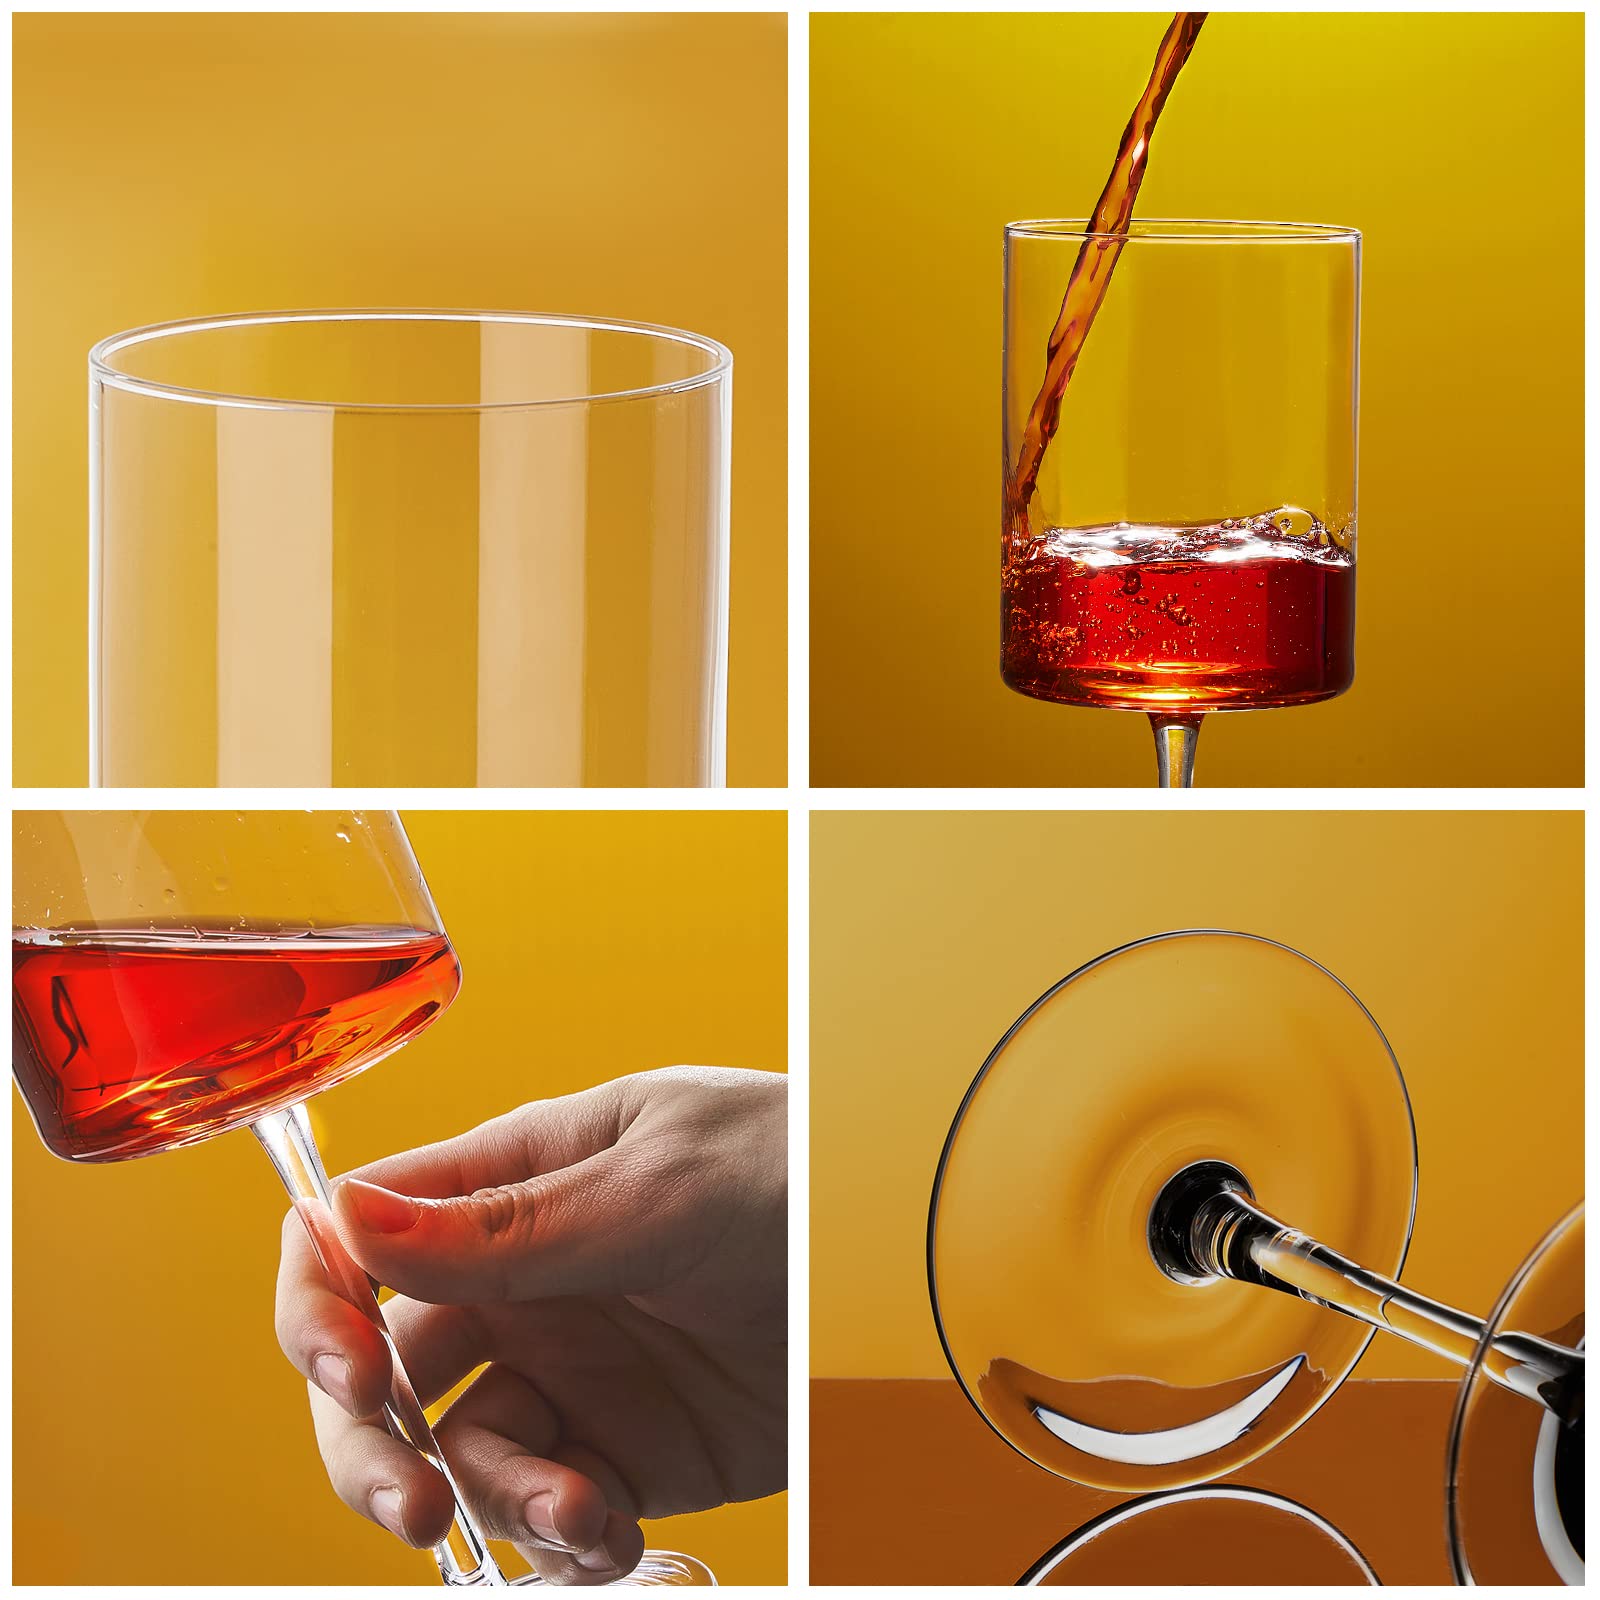 Crystal Square Wine Glasses Set Of 4-14 oz Stemware - Hand Blown Edge Wine Glasses- Red and White Wine Glasses With Stem - Premium Clear Drinkware Glassware